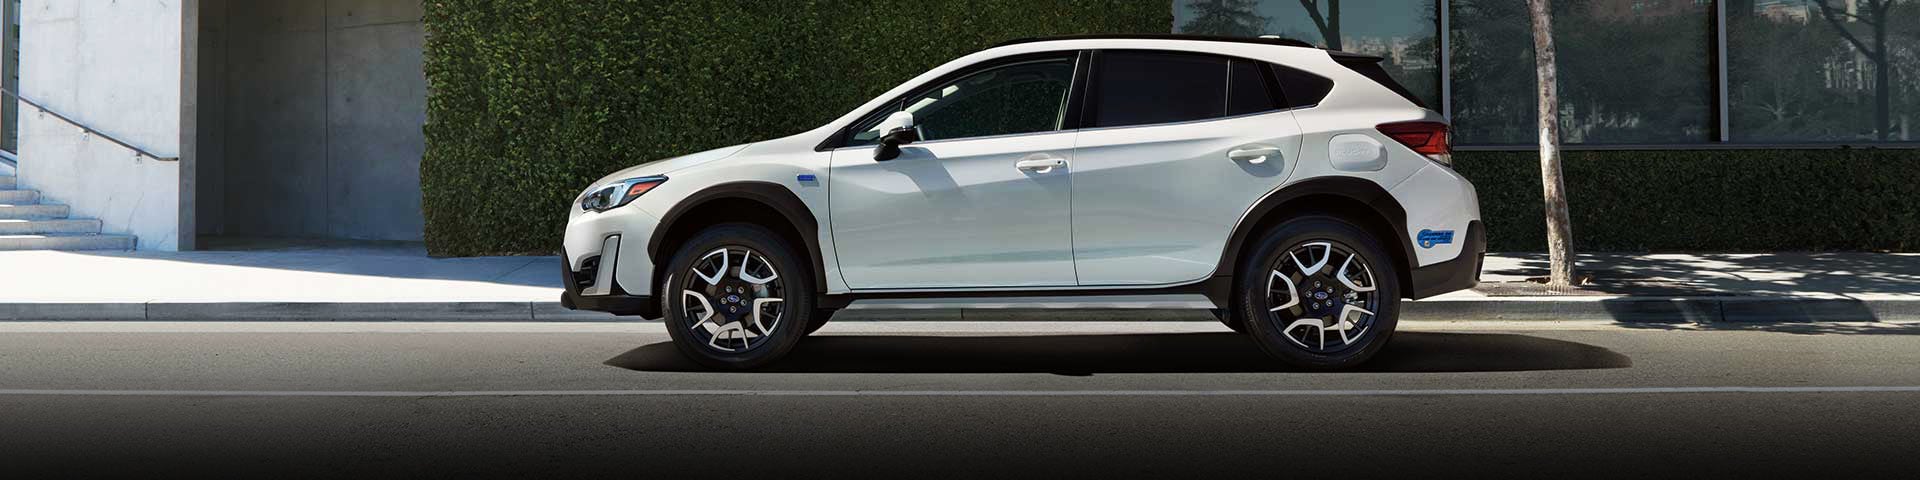 The side profile of a white Subaru Crosstrek Hybrid | Five Star Subaru in Grapevine TX